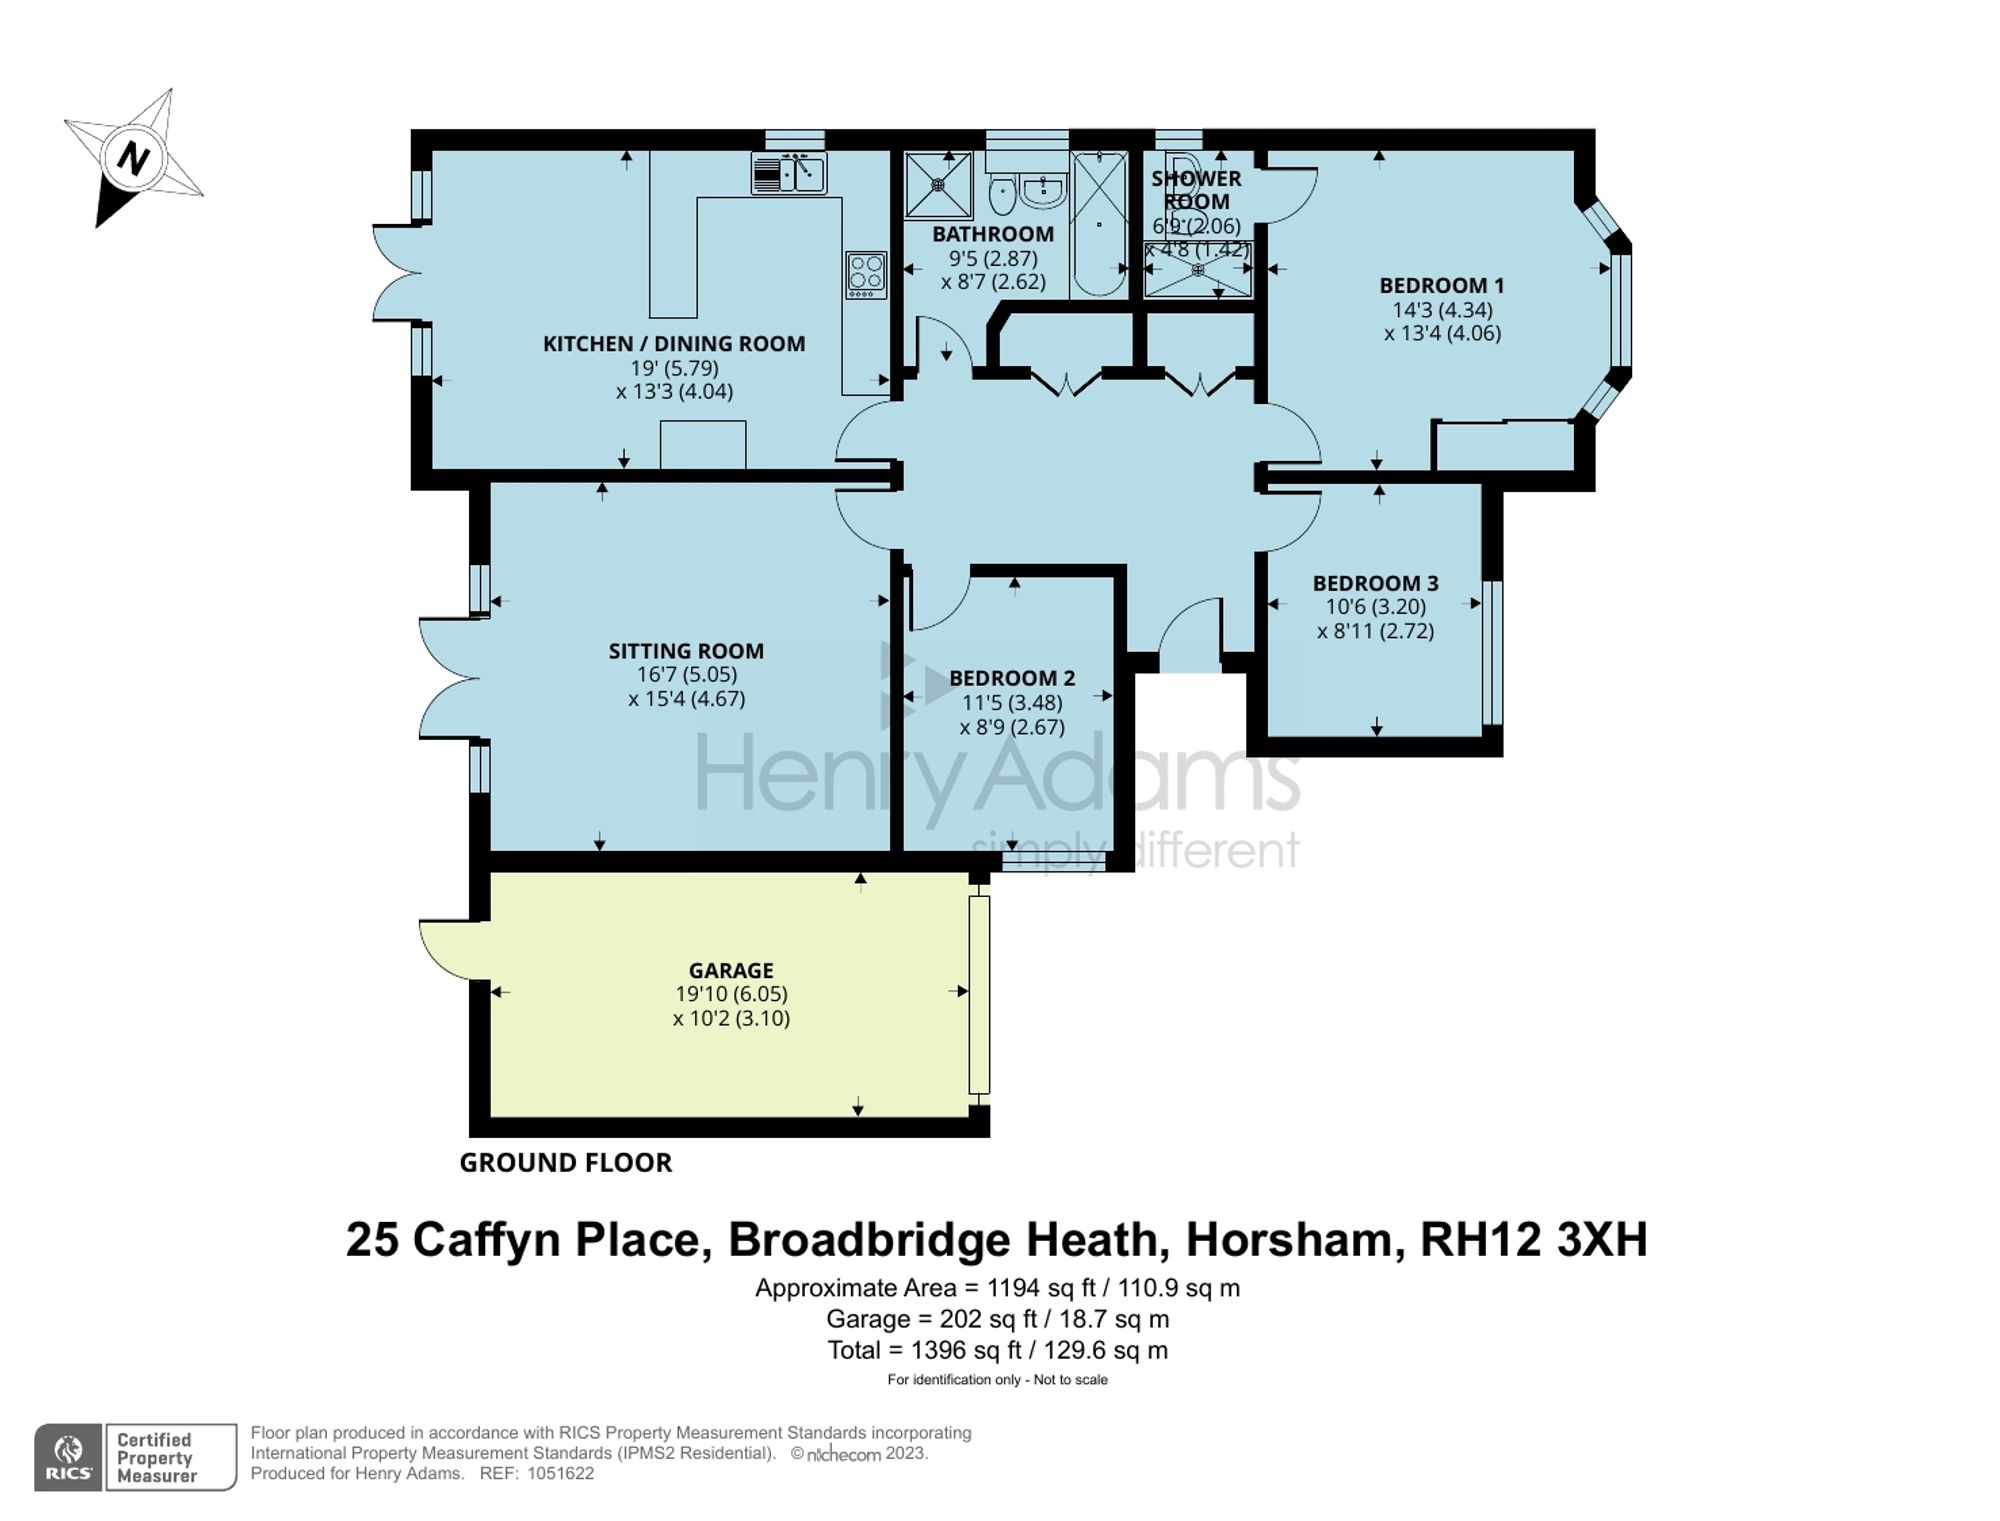 Caffyn Place, Broadbridge Heath, RH12 floorplans